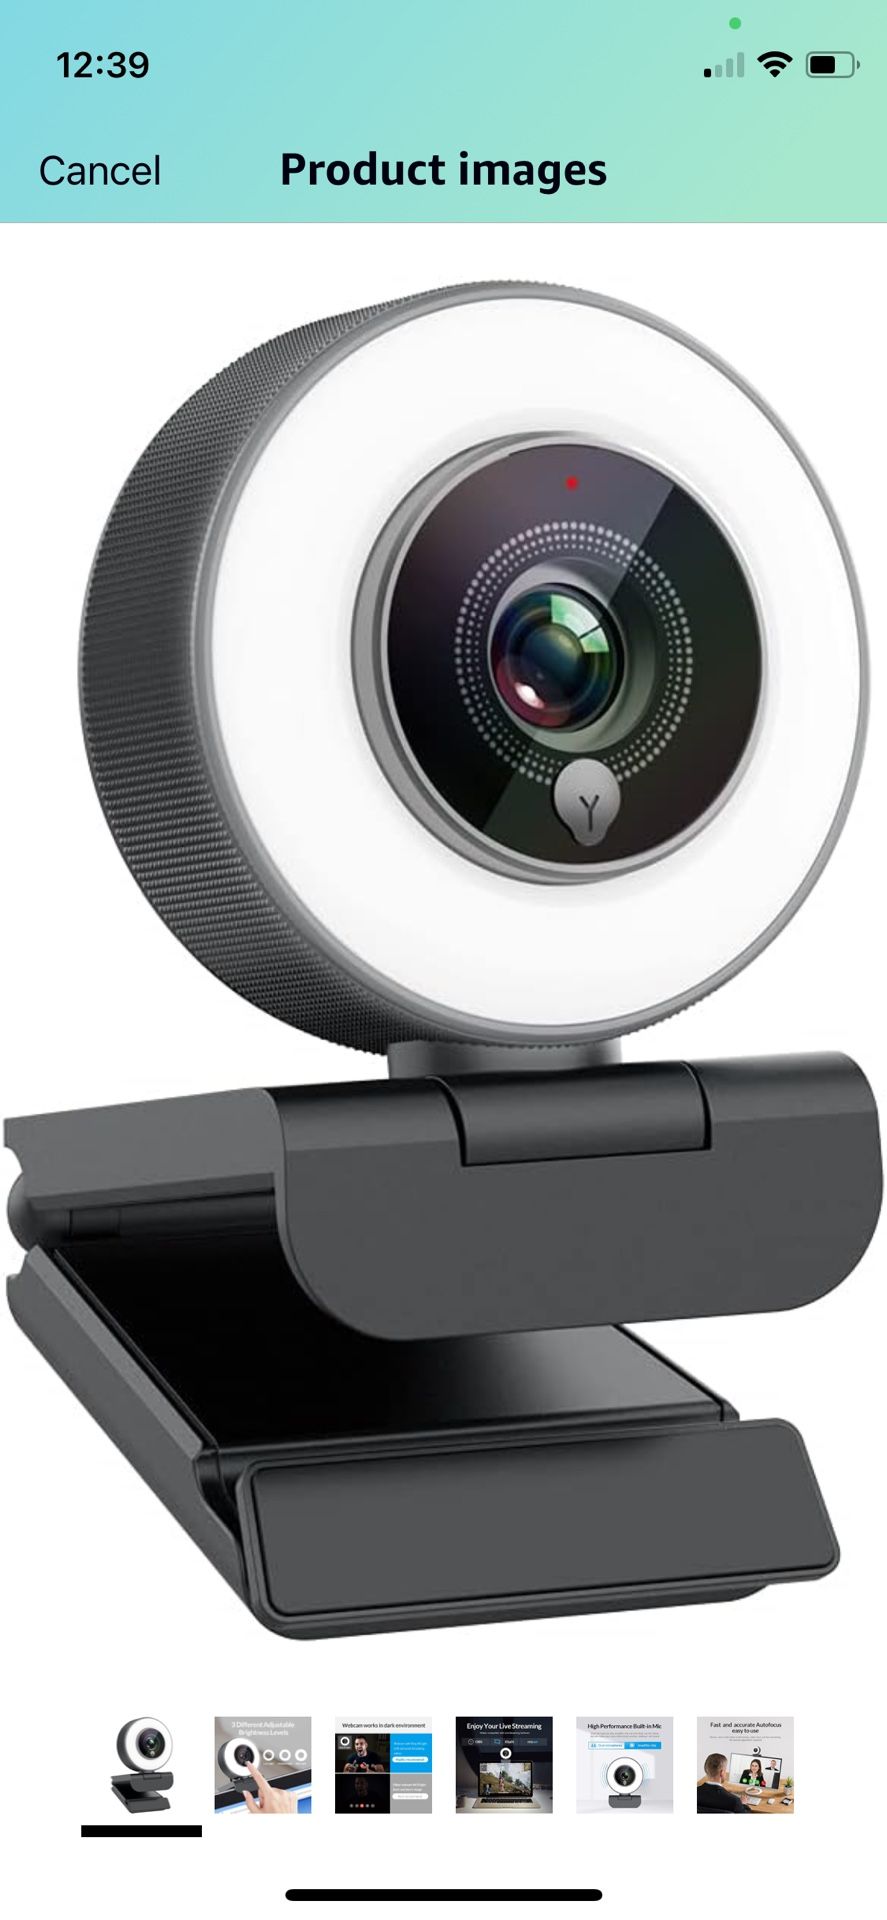 Angetube Streaming 1080P HD Webcam Built in Adjustable Ring Light and Mic. Advanced autofocus AF Web Camera for Google Meet Gamer Facebook YouTube Str